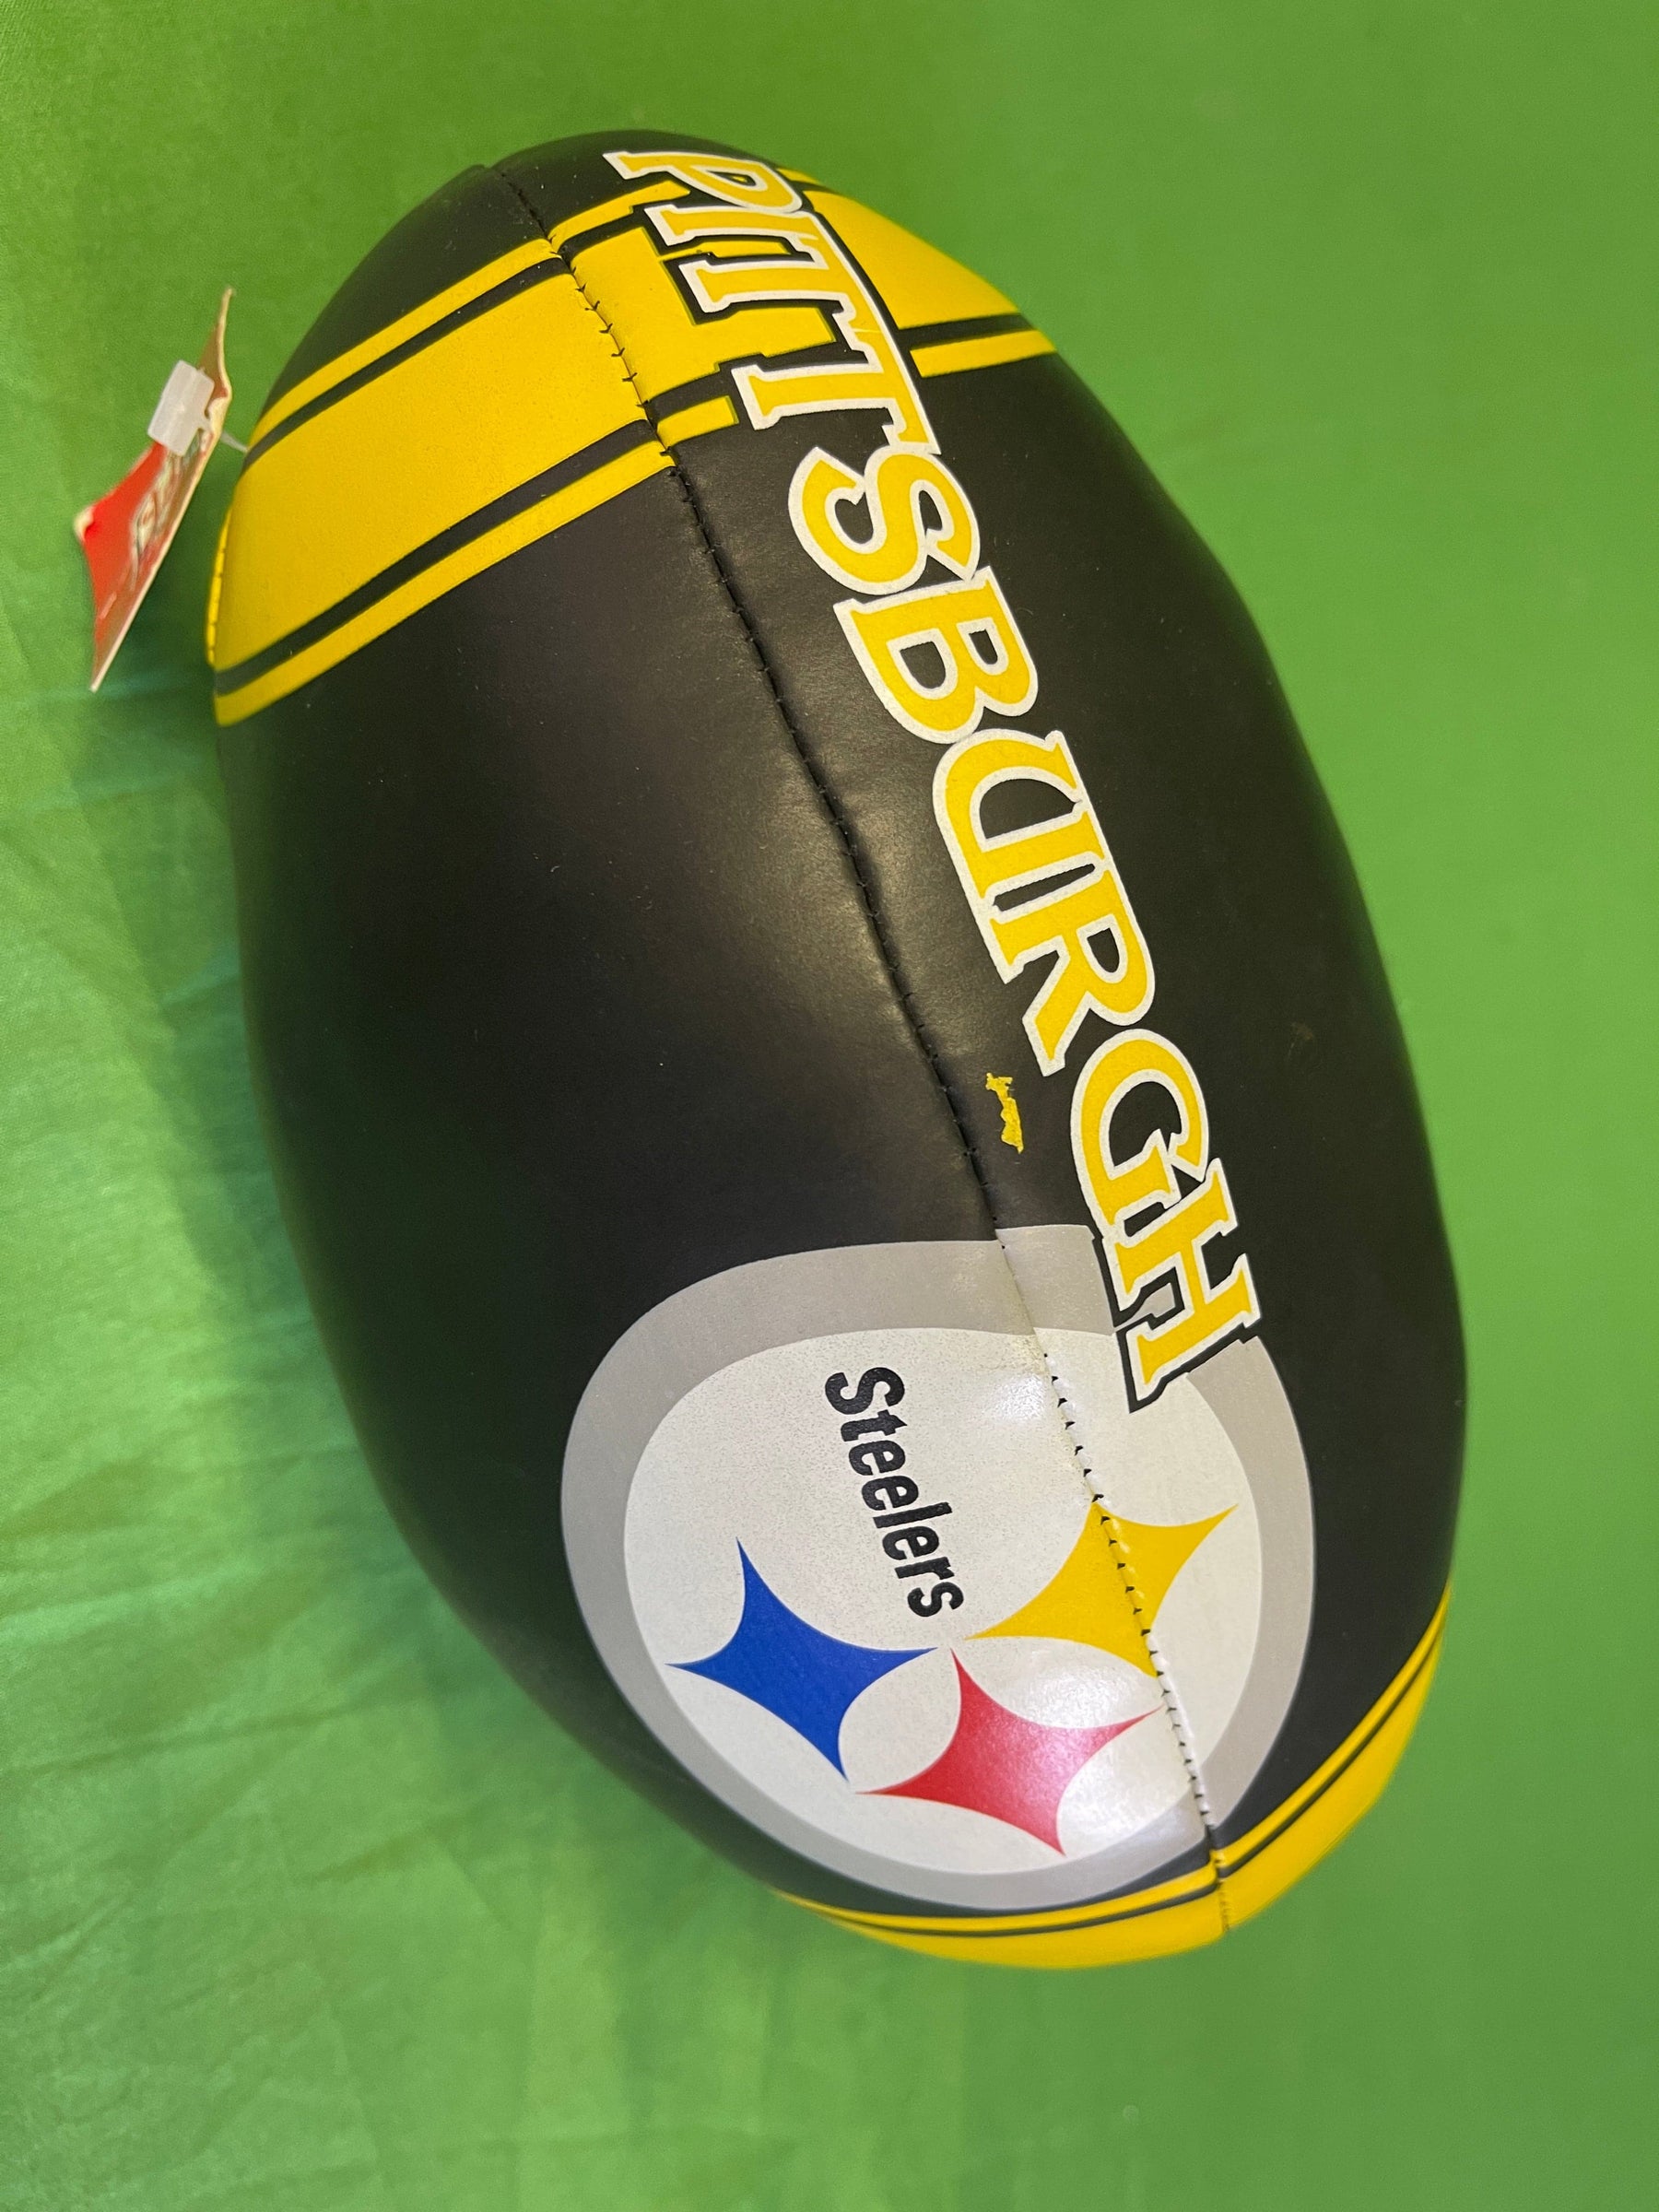 NFL Pittsburgh Steelers Soft Squishy 9" Football NWT